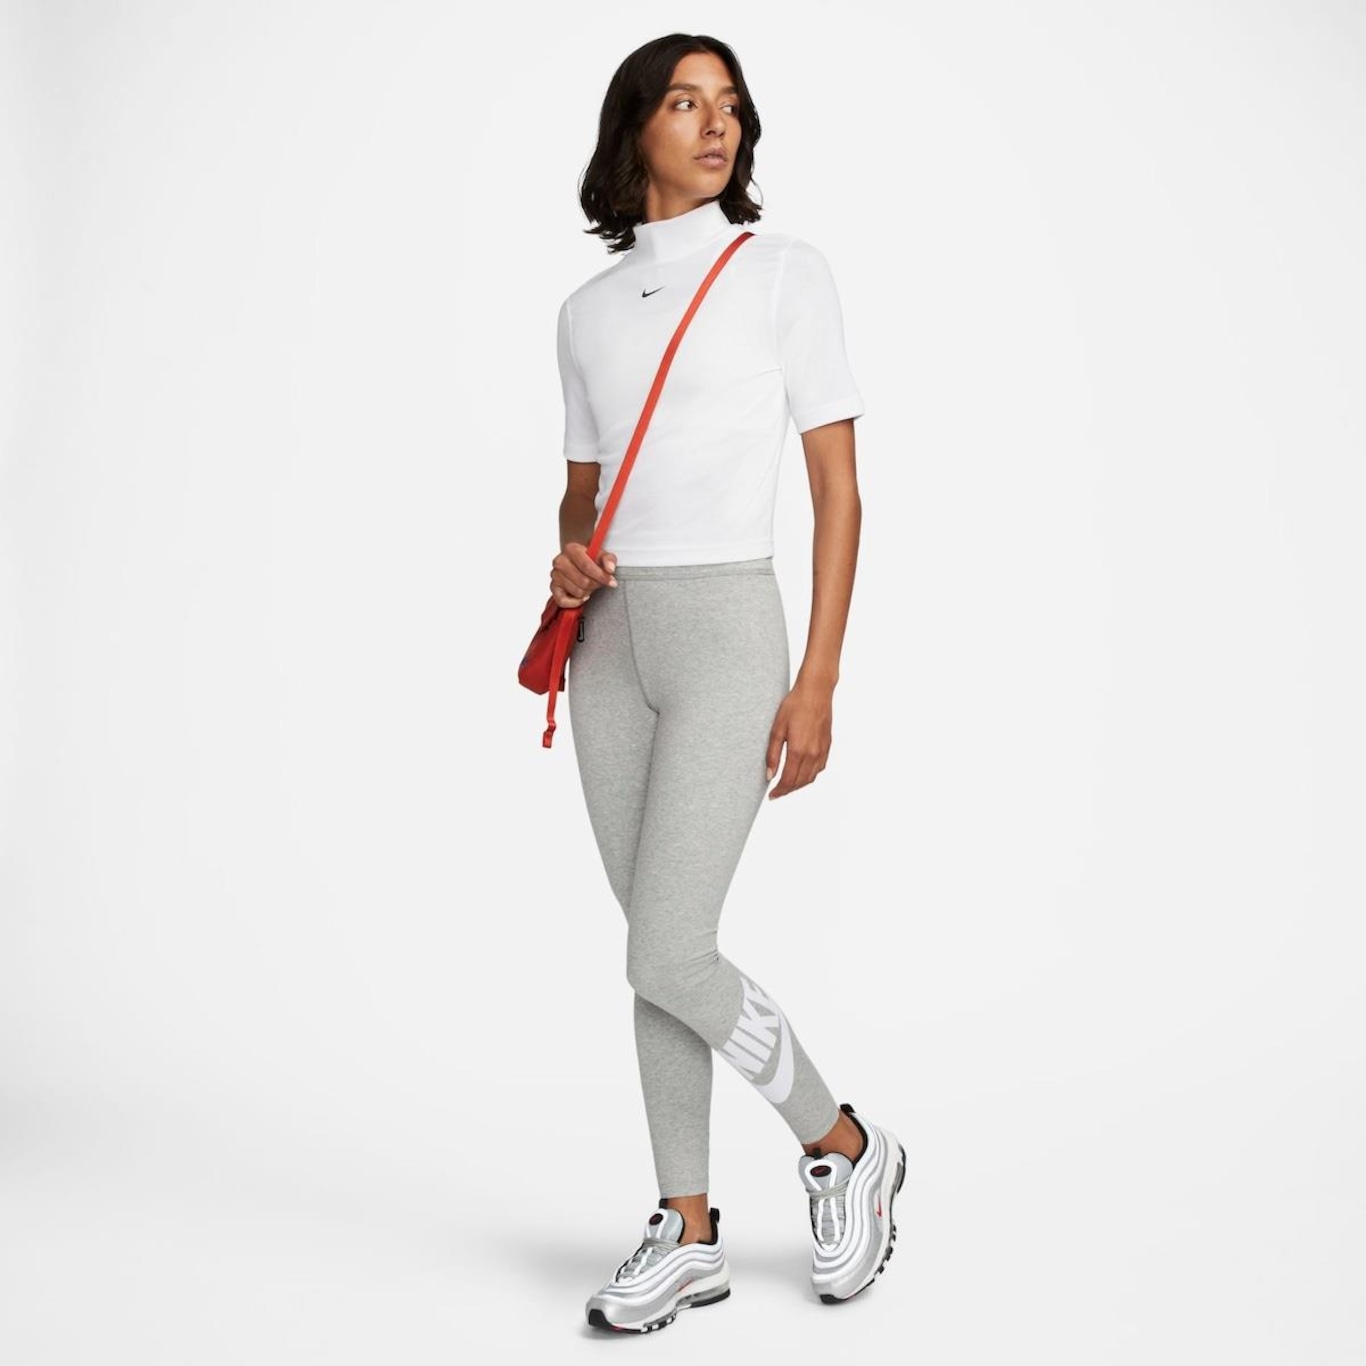 Legging Nike Sportswear Just Do It Feminina - Compre Agora